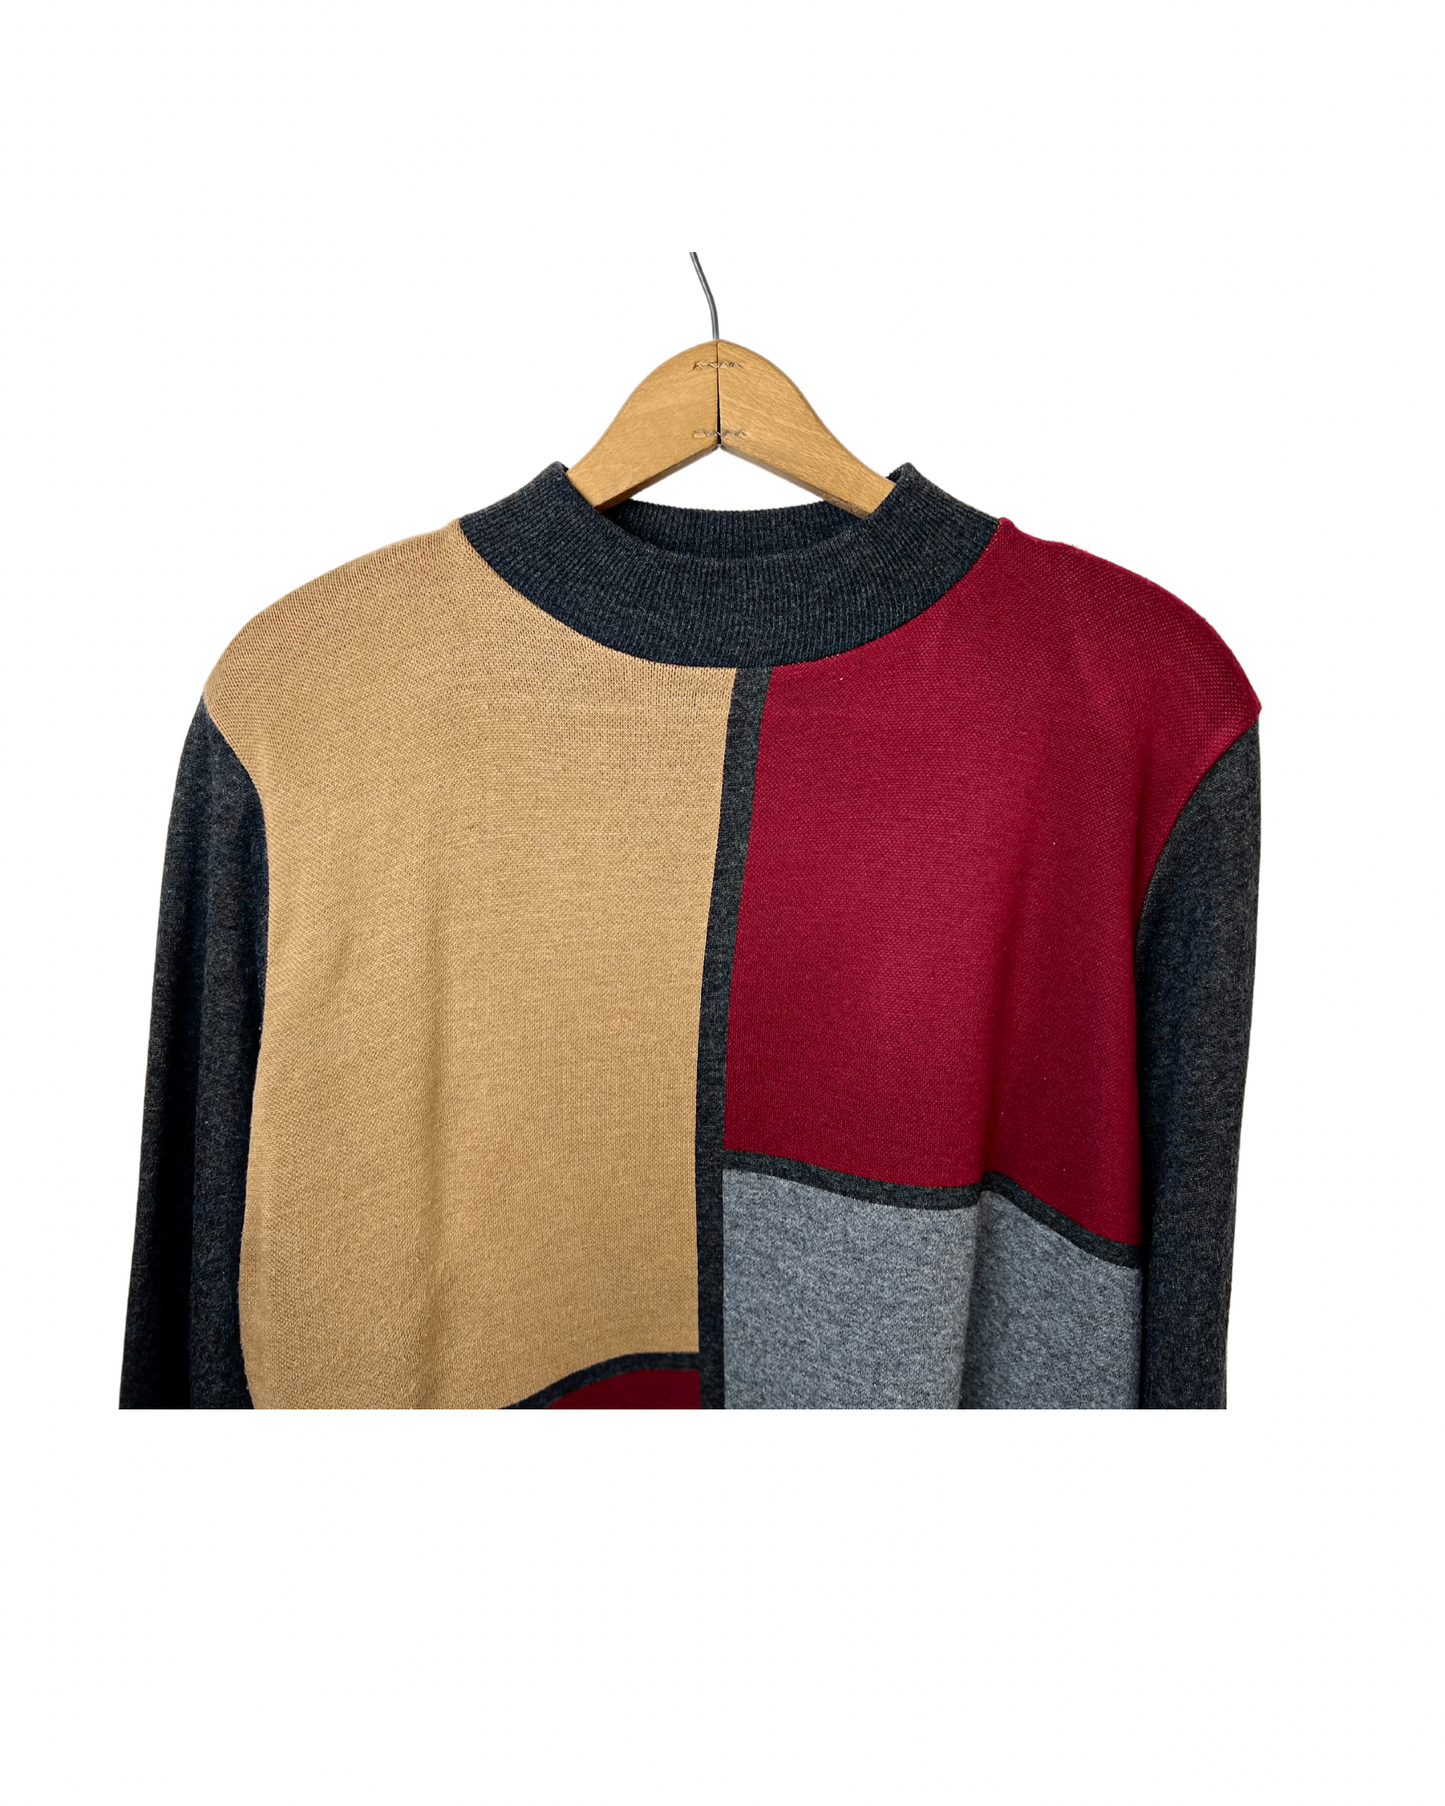 90’s Mod Square Mockneck Sweater